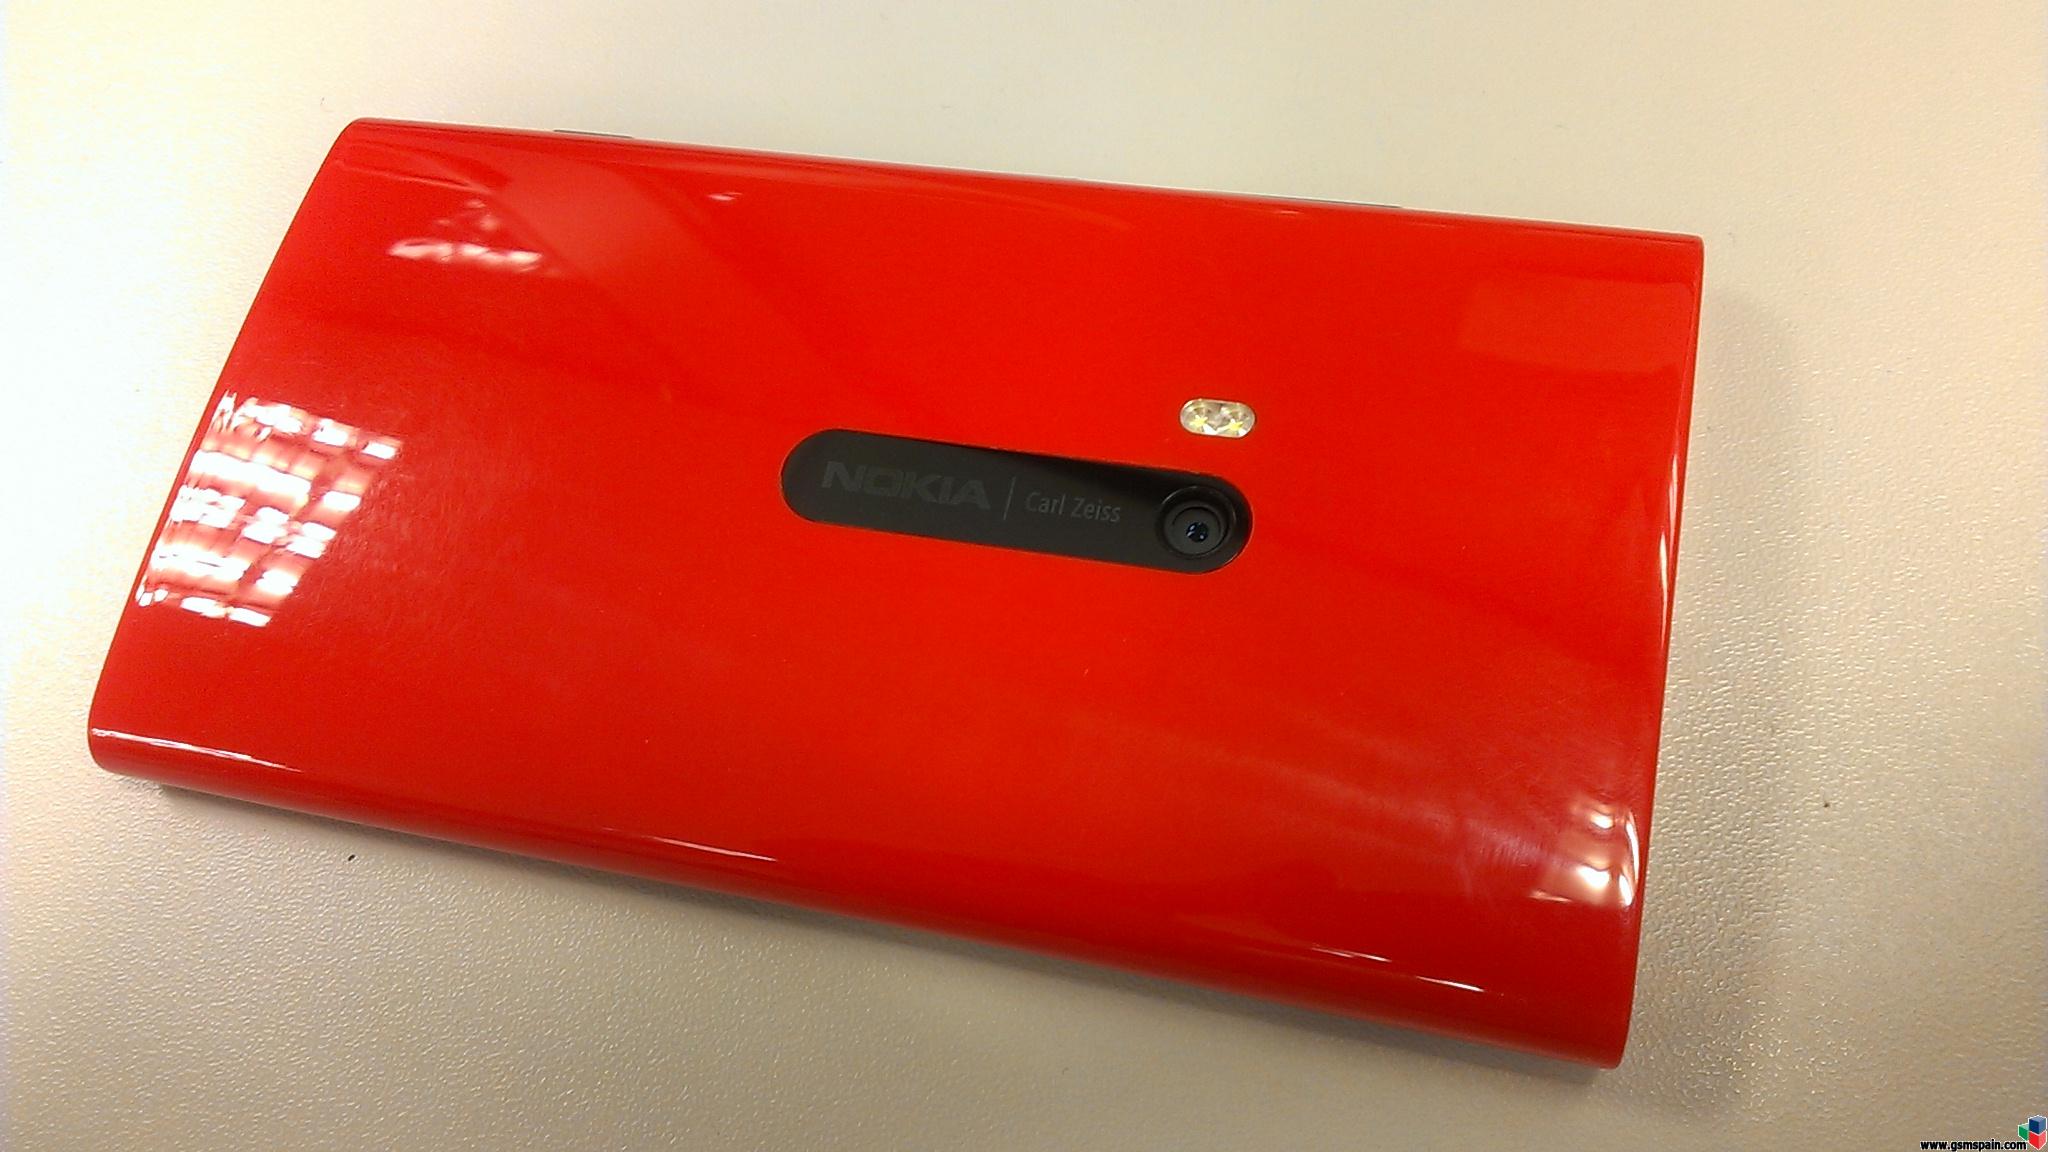 [CAMBIO] [VENDO] Nokia Lumia 920 Rojo Libre de origen con Amber